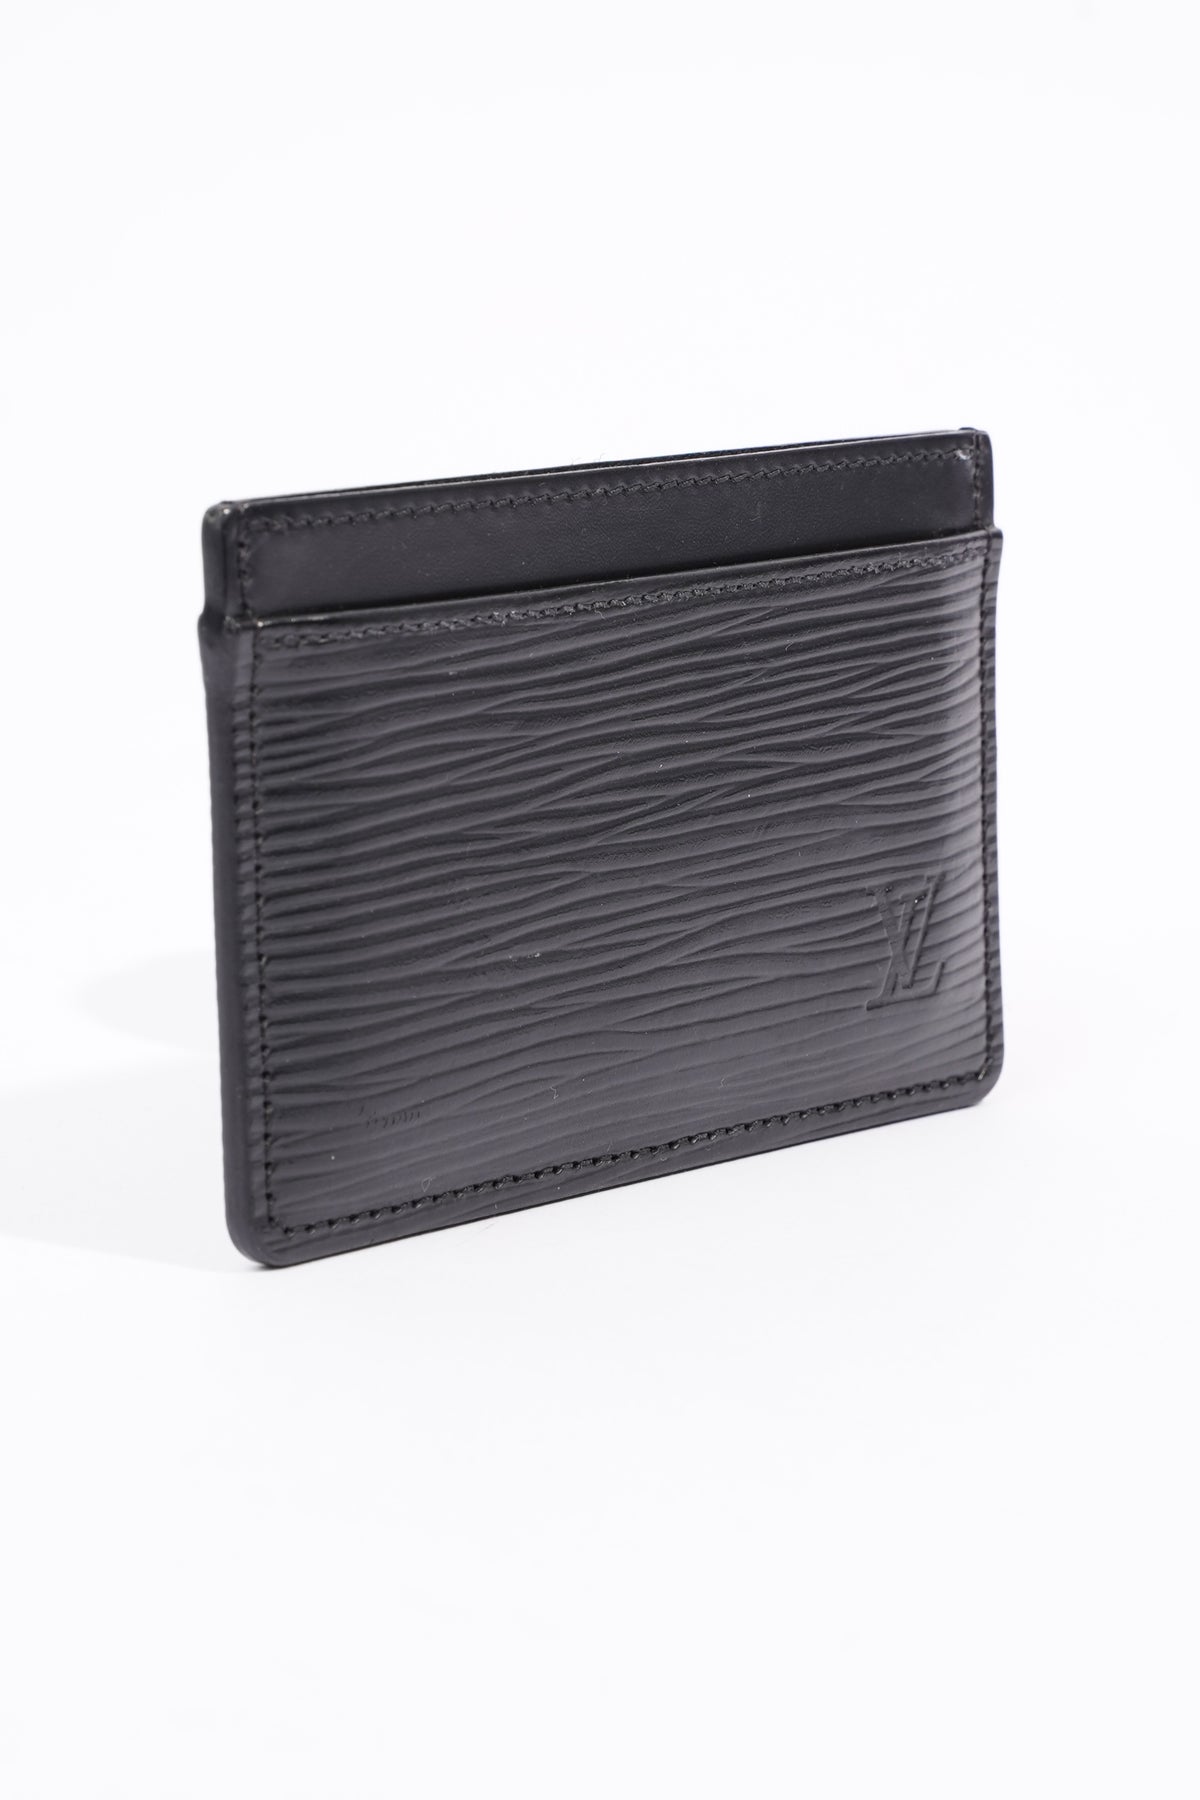 Louis Vuitton Black Epi Leather ID Holder Card Case Wallet